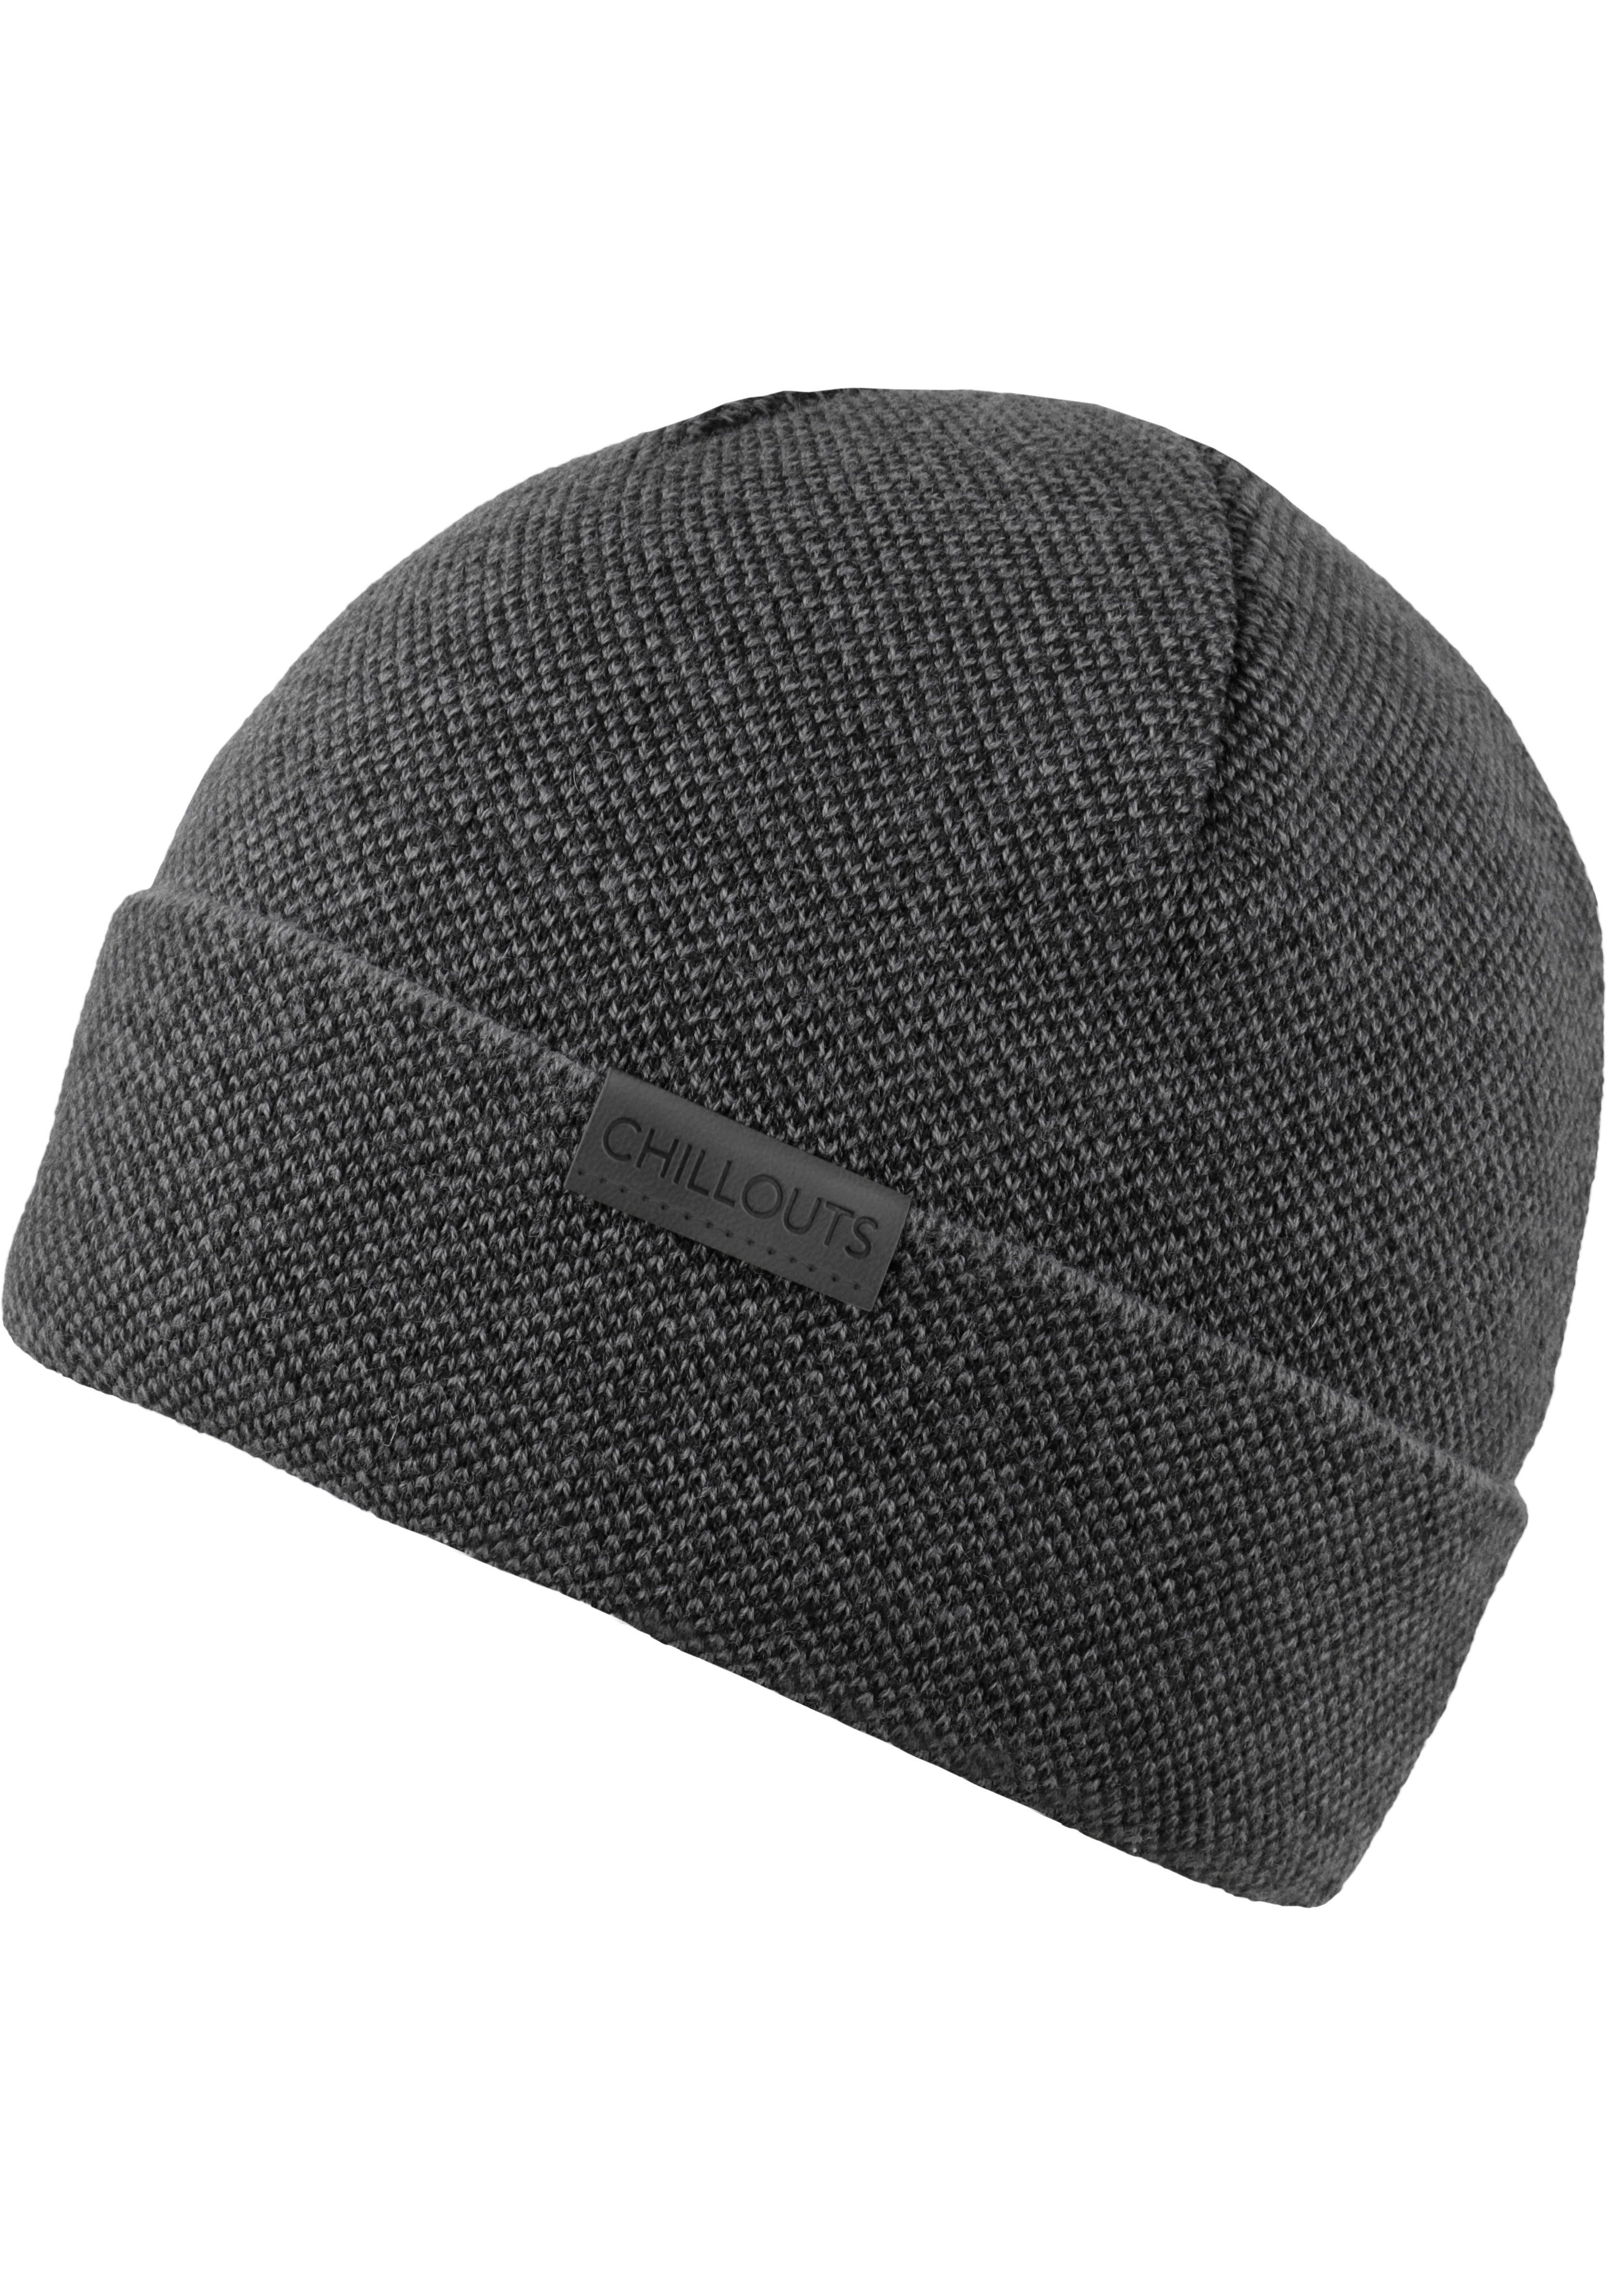 Kilian Hat Strickmütze chillouts dark grey